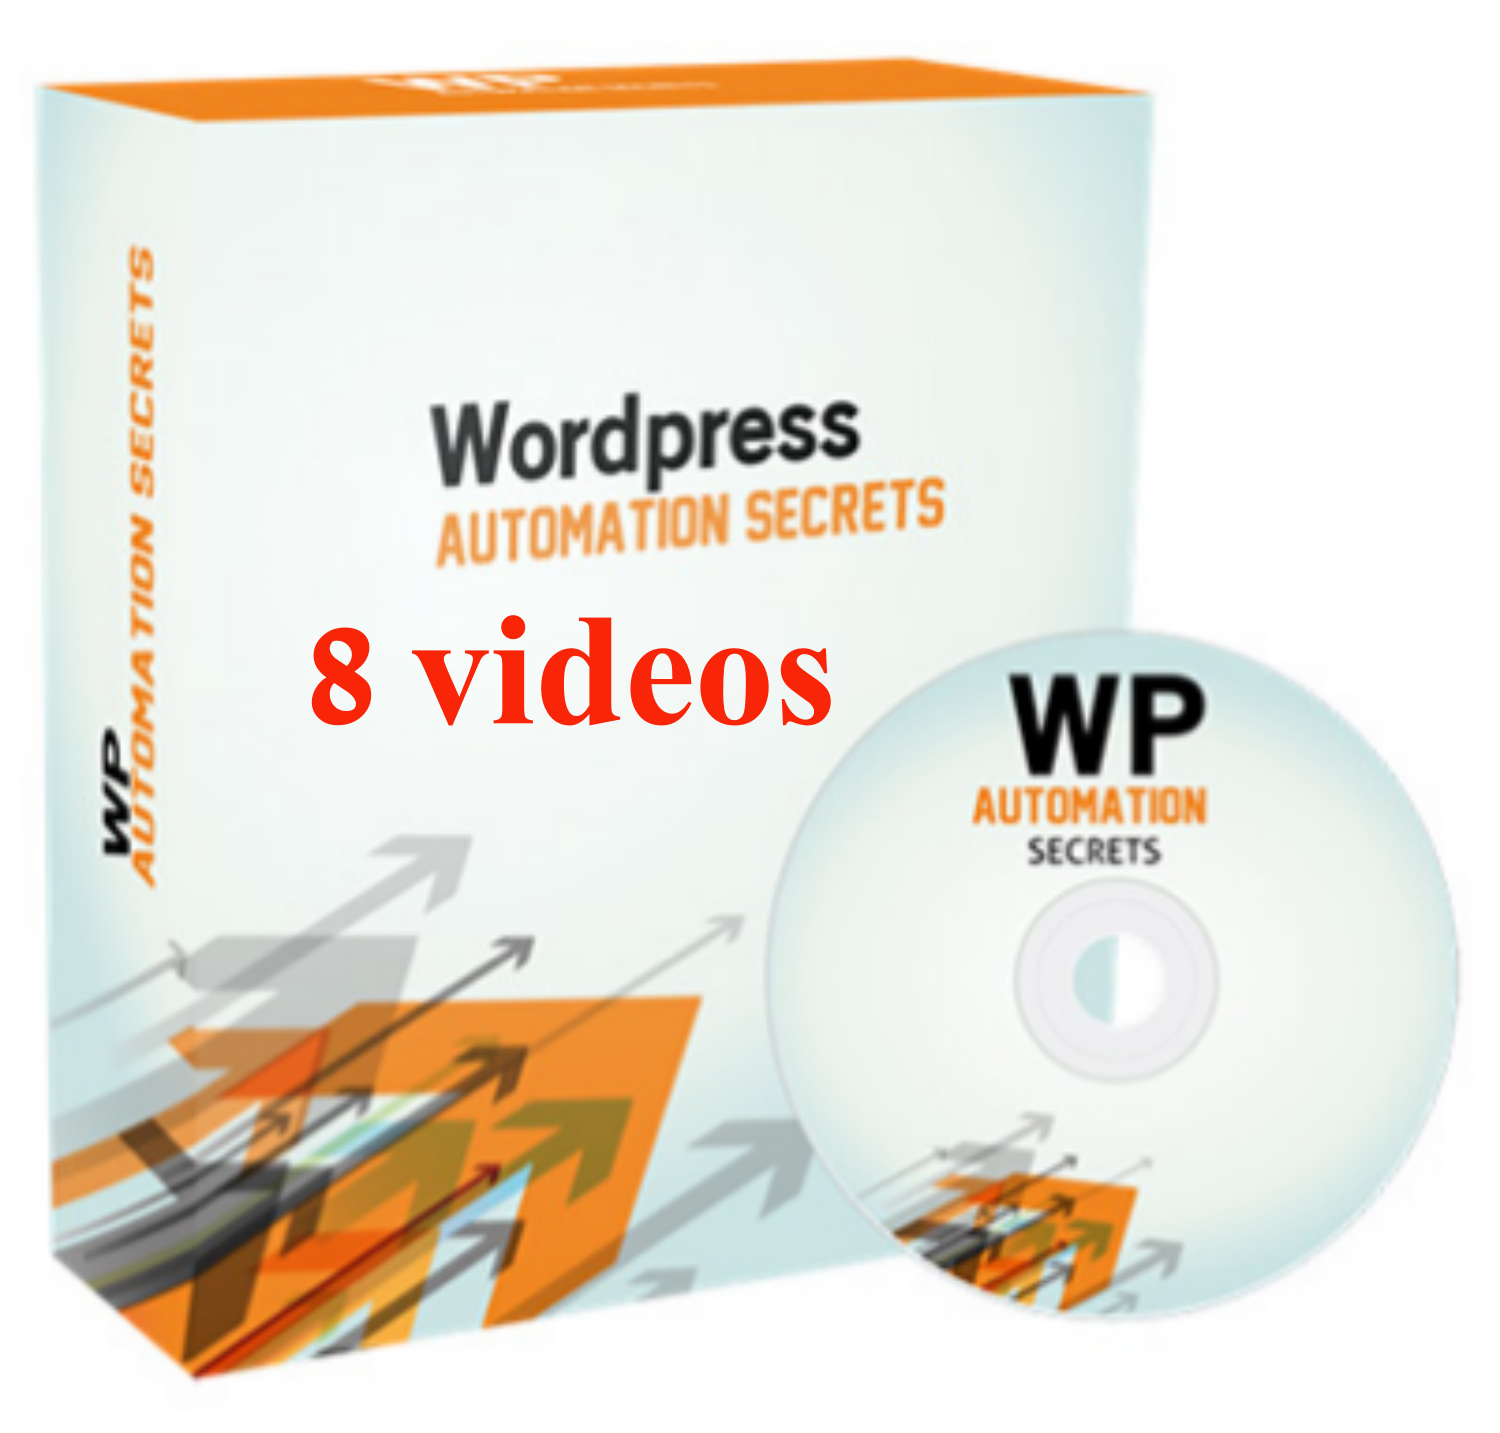 WP Automation Secrets wordpress course mi digital